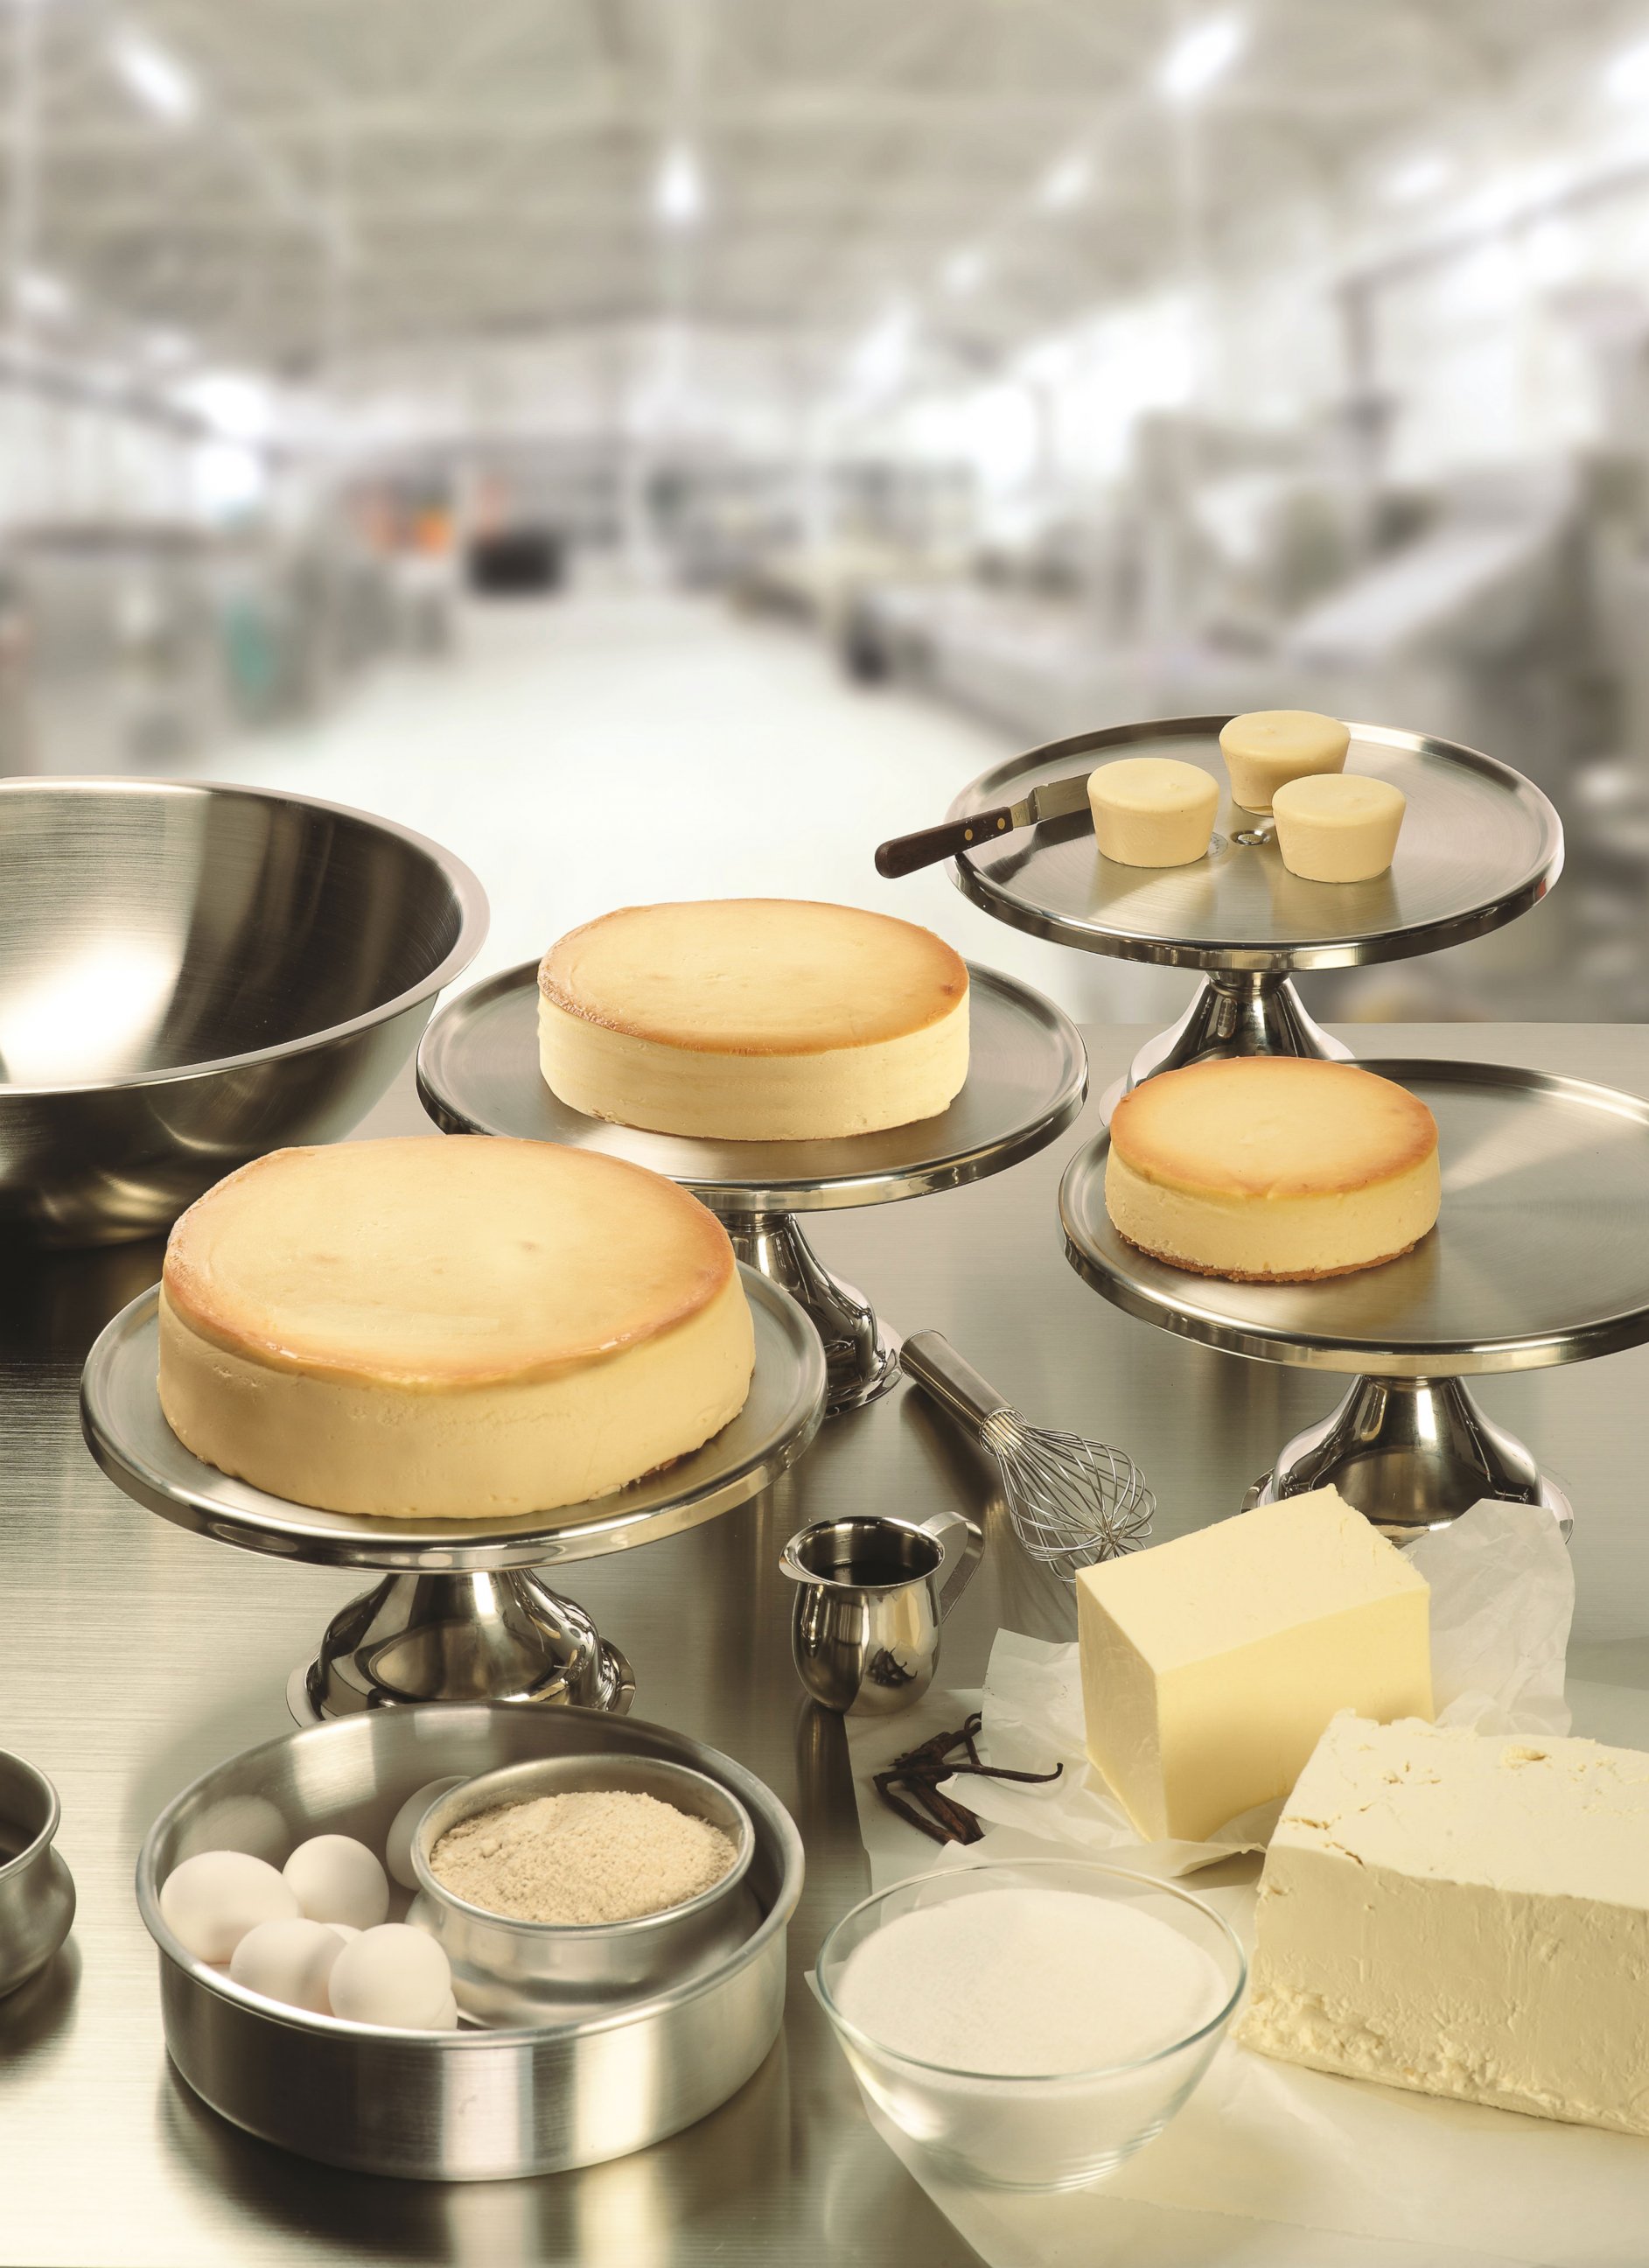 PHOTO: Make some cheesecake this July 30, National Cheesecake Day.